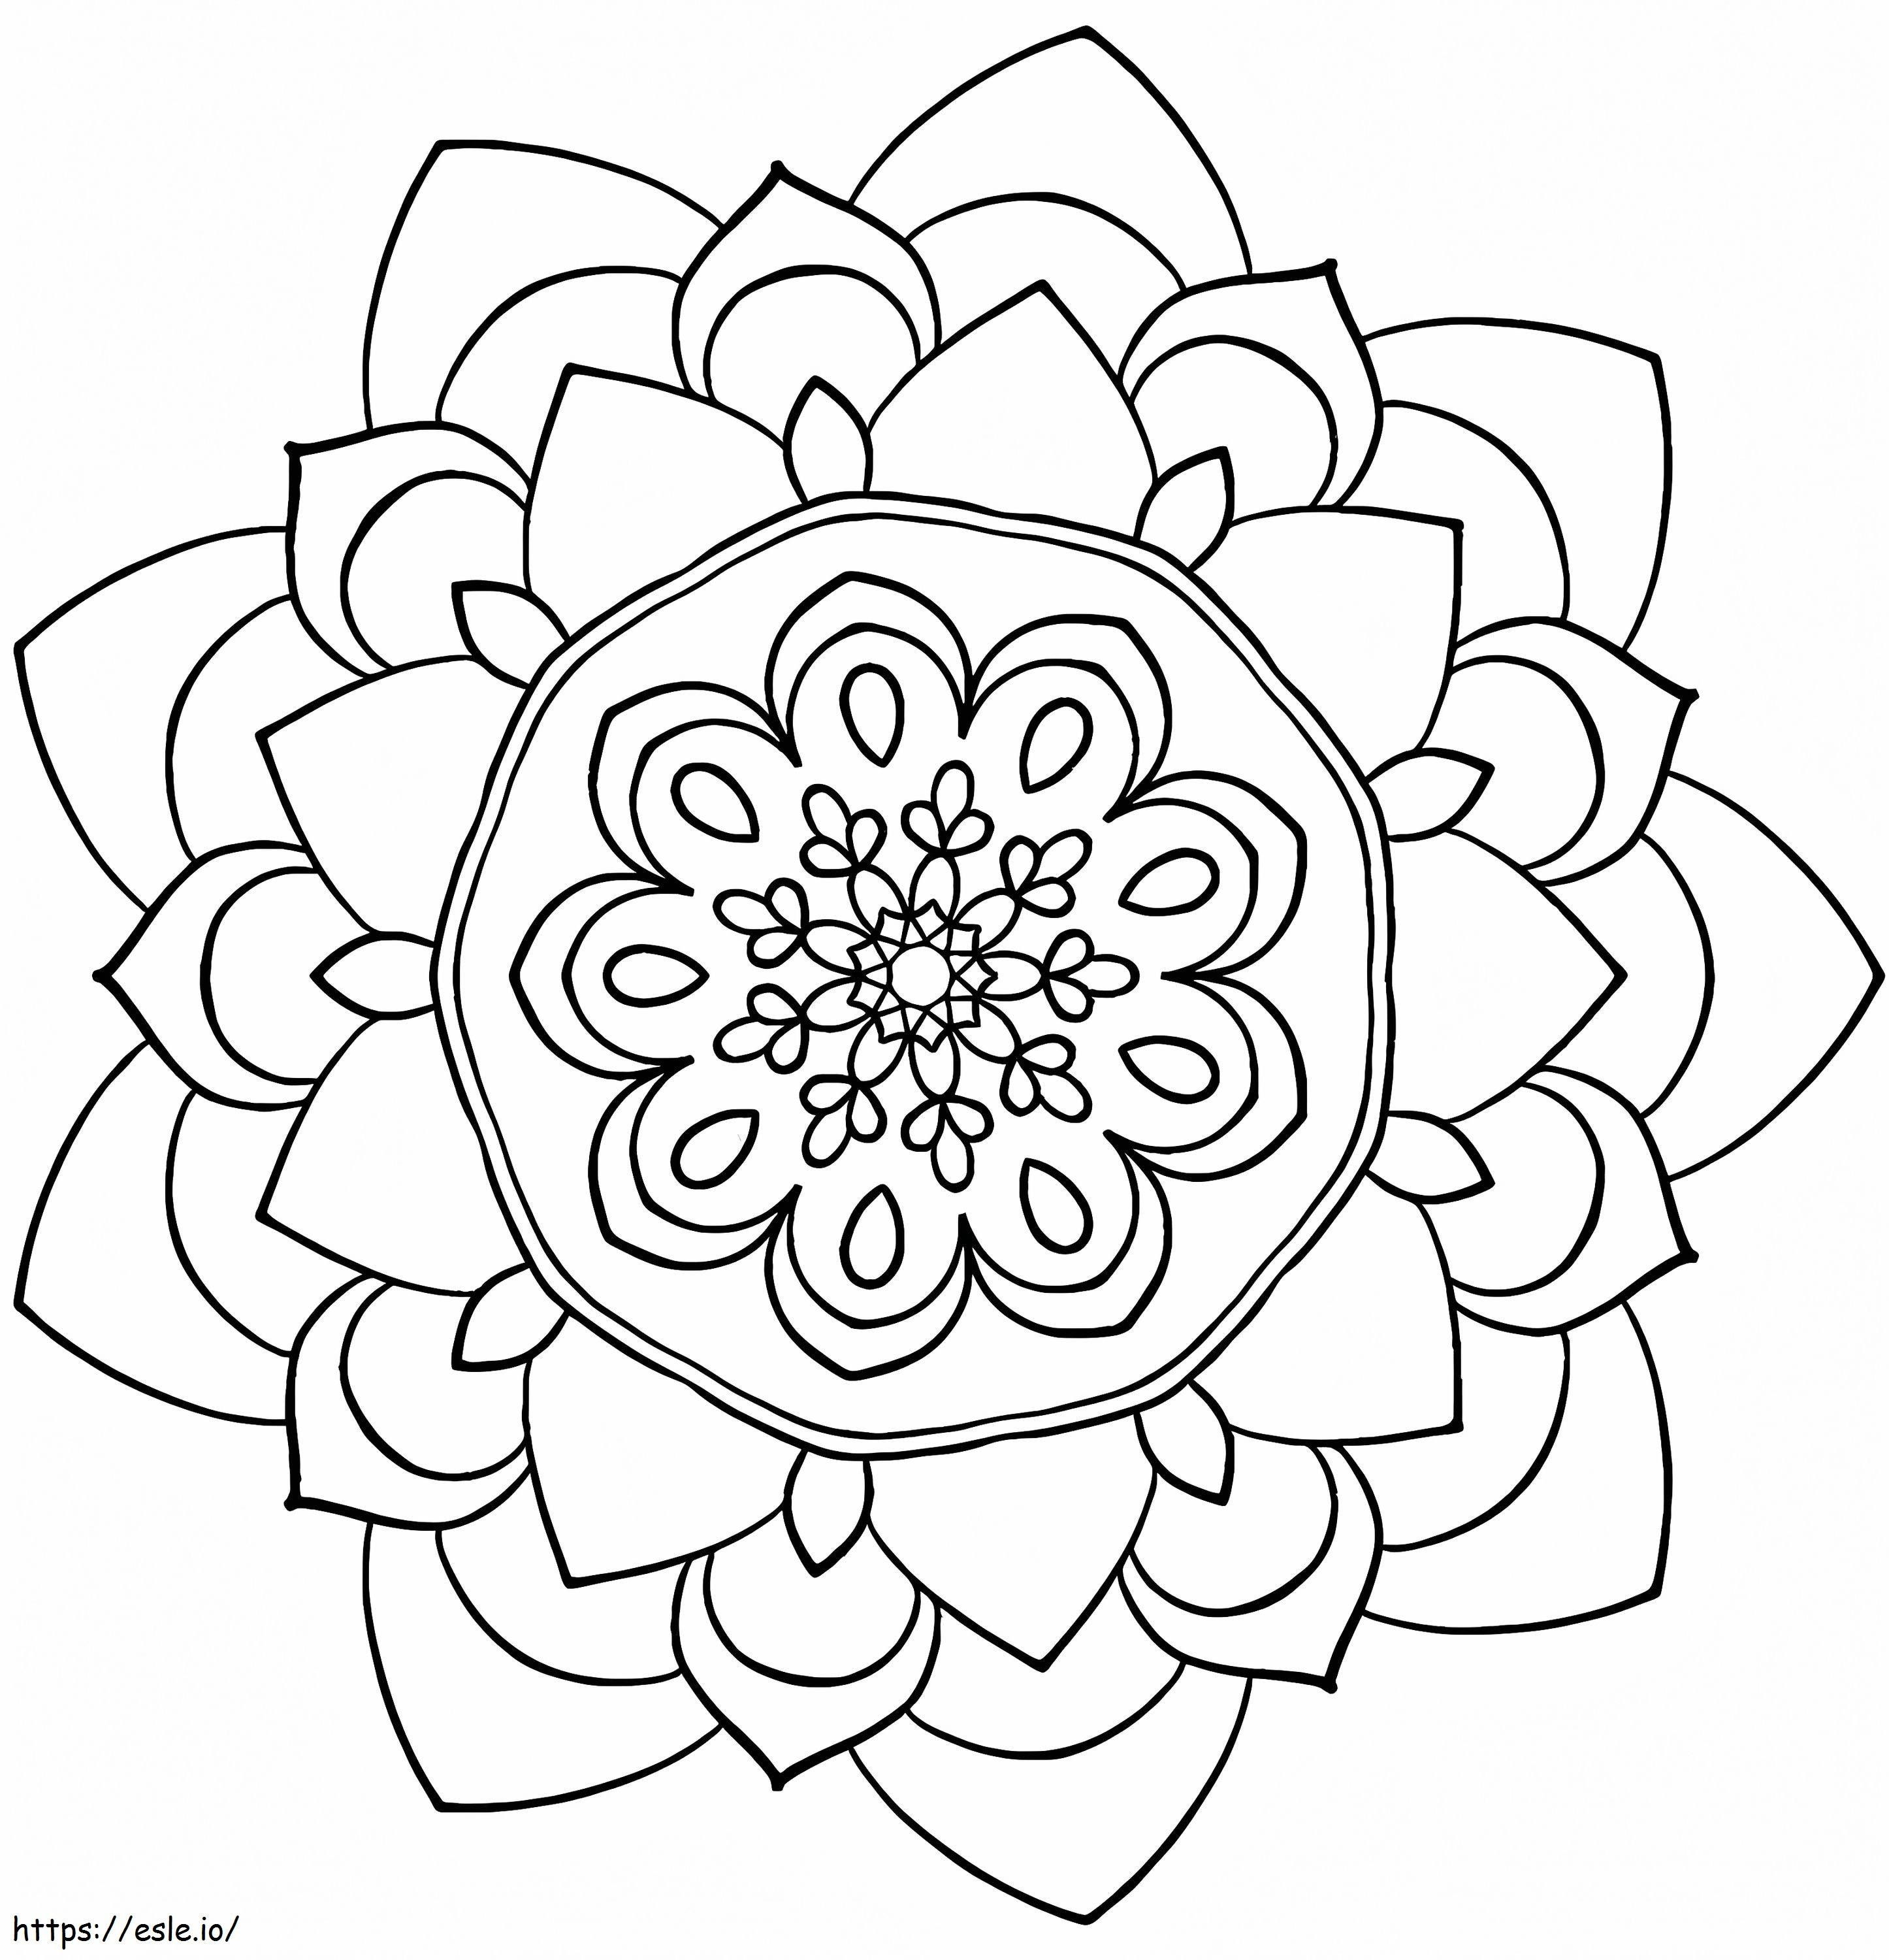 Flower Mandala 17 coloring page